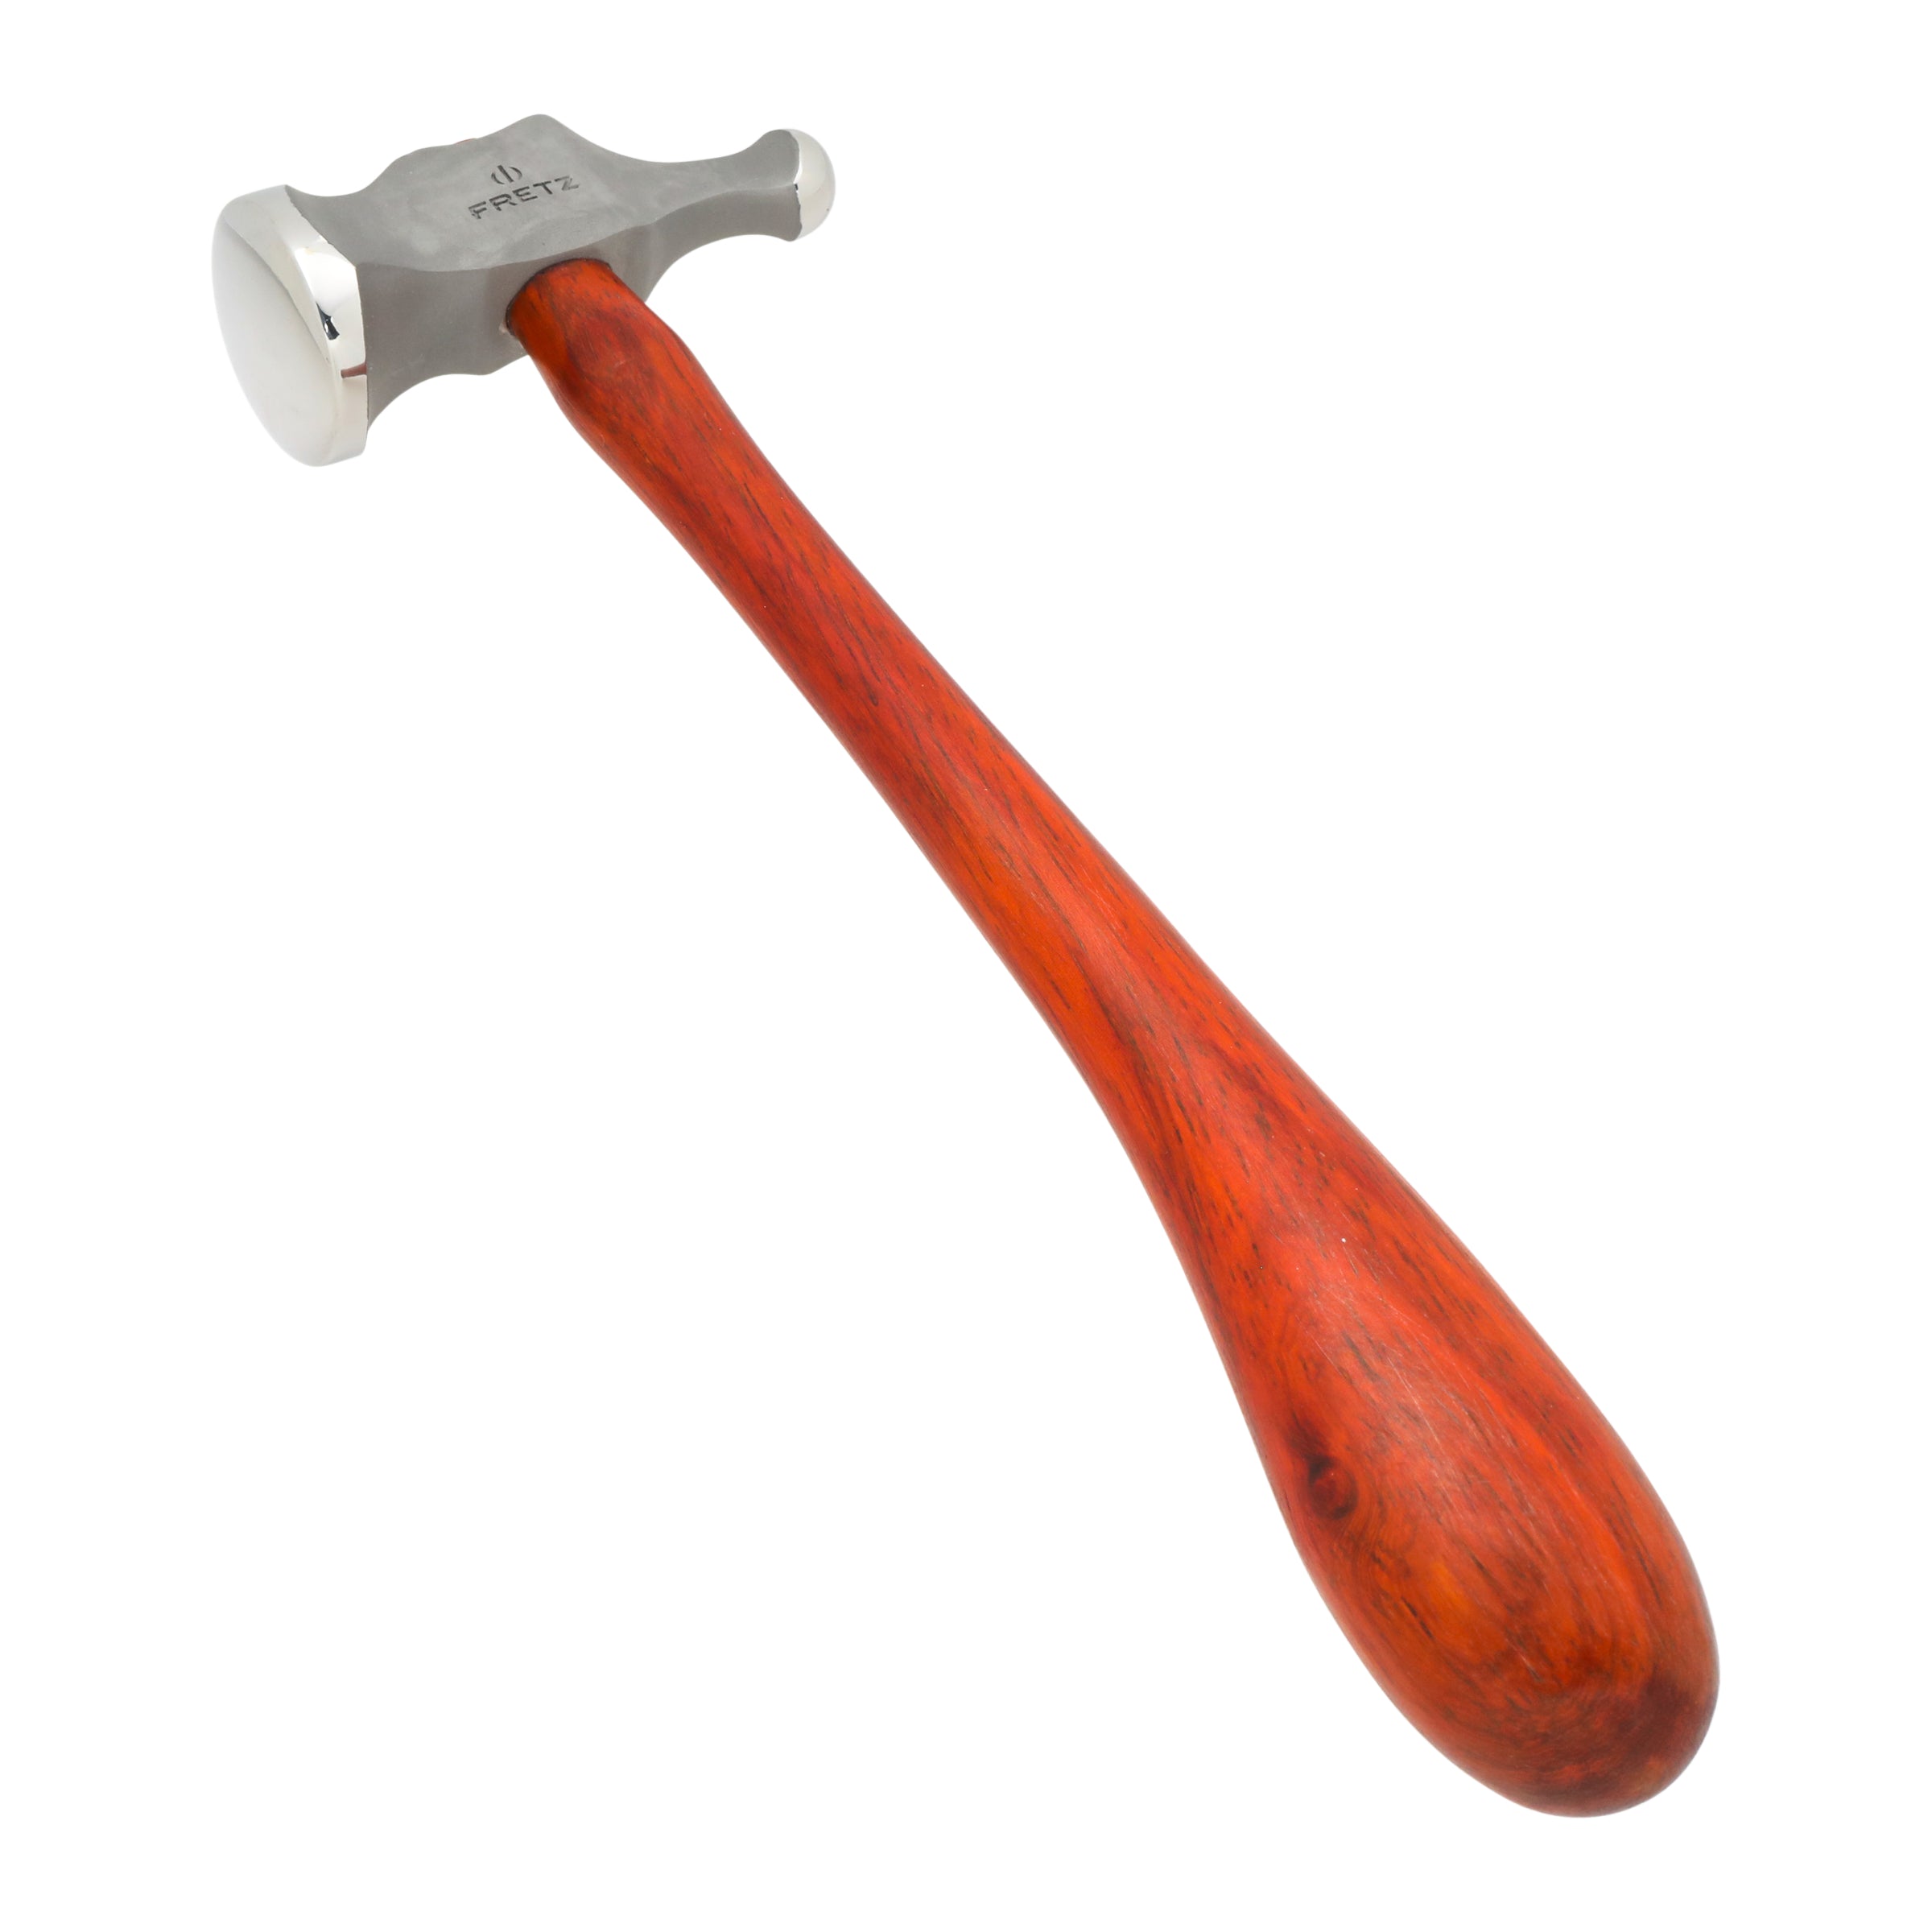 Fretz® HMR-20M Medium Classic Chasing Hammer, 4.4 oz. - RioGrande